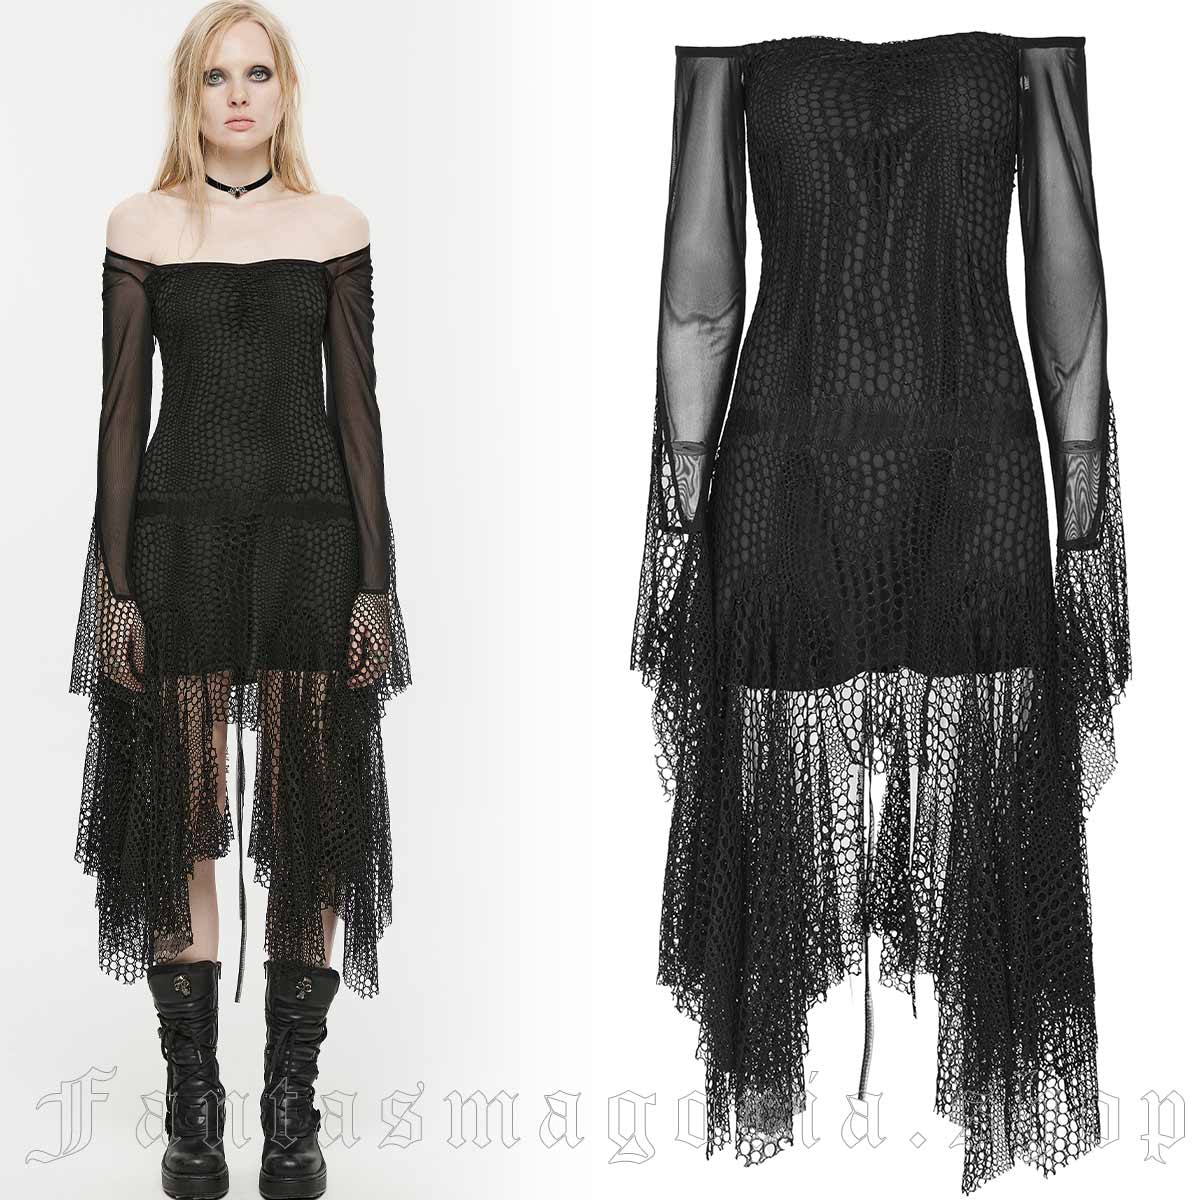 Women's Gothic black midi length off-shoulder long sleeve wide mesh overlay hanky hem dress. - Punk Rave - OPQ-1365/BK